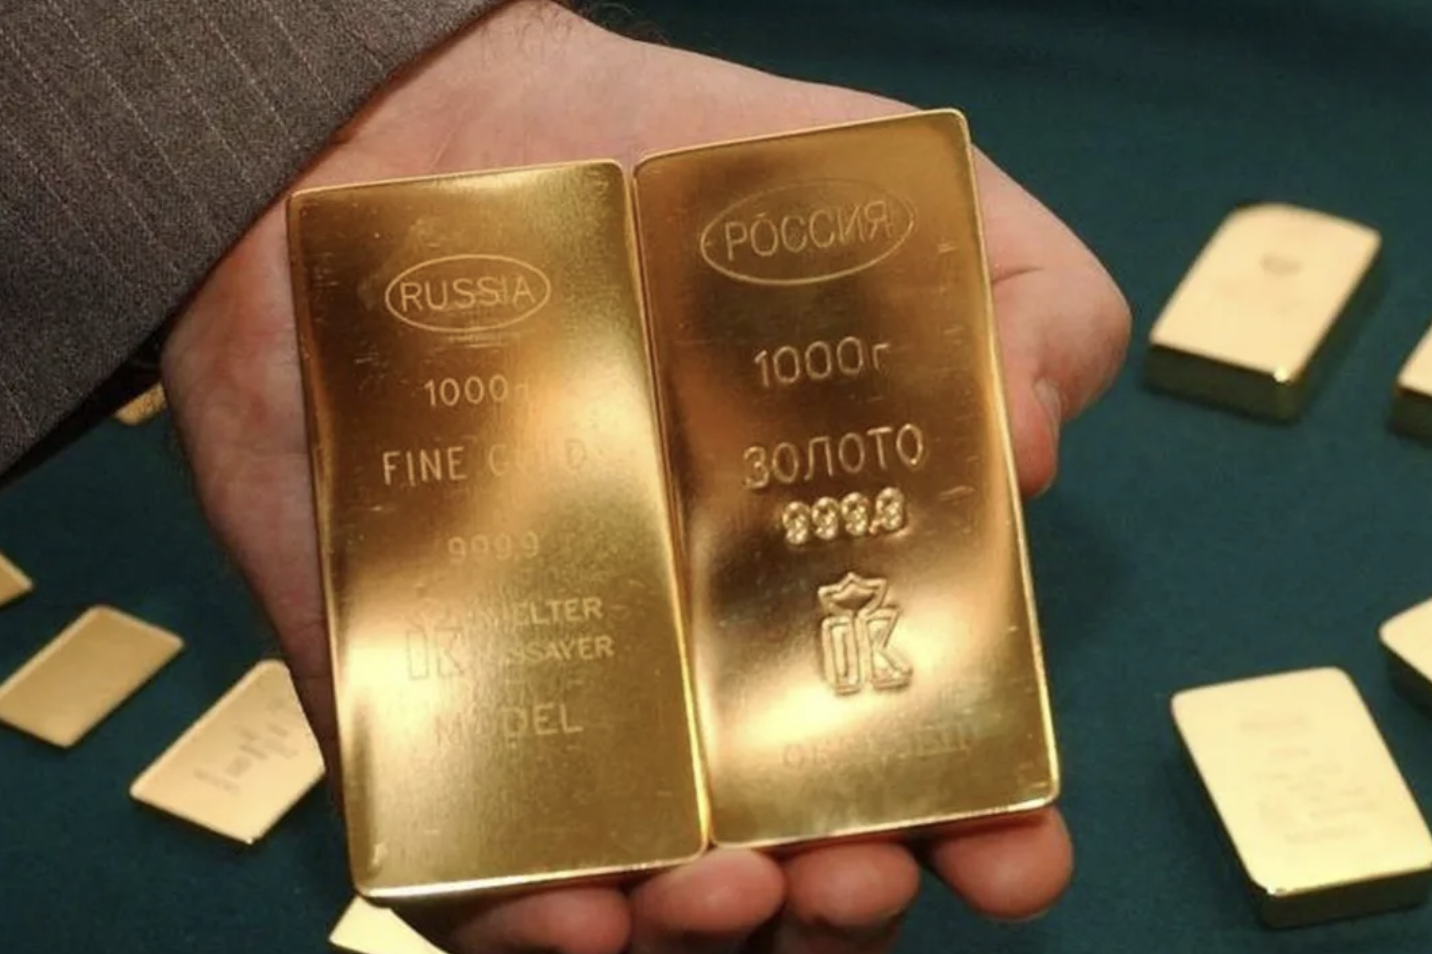 2 гр золота. Слиток золотой. Банковское золото. Банковские золотые слитки. Слитки российского золота.